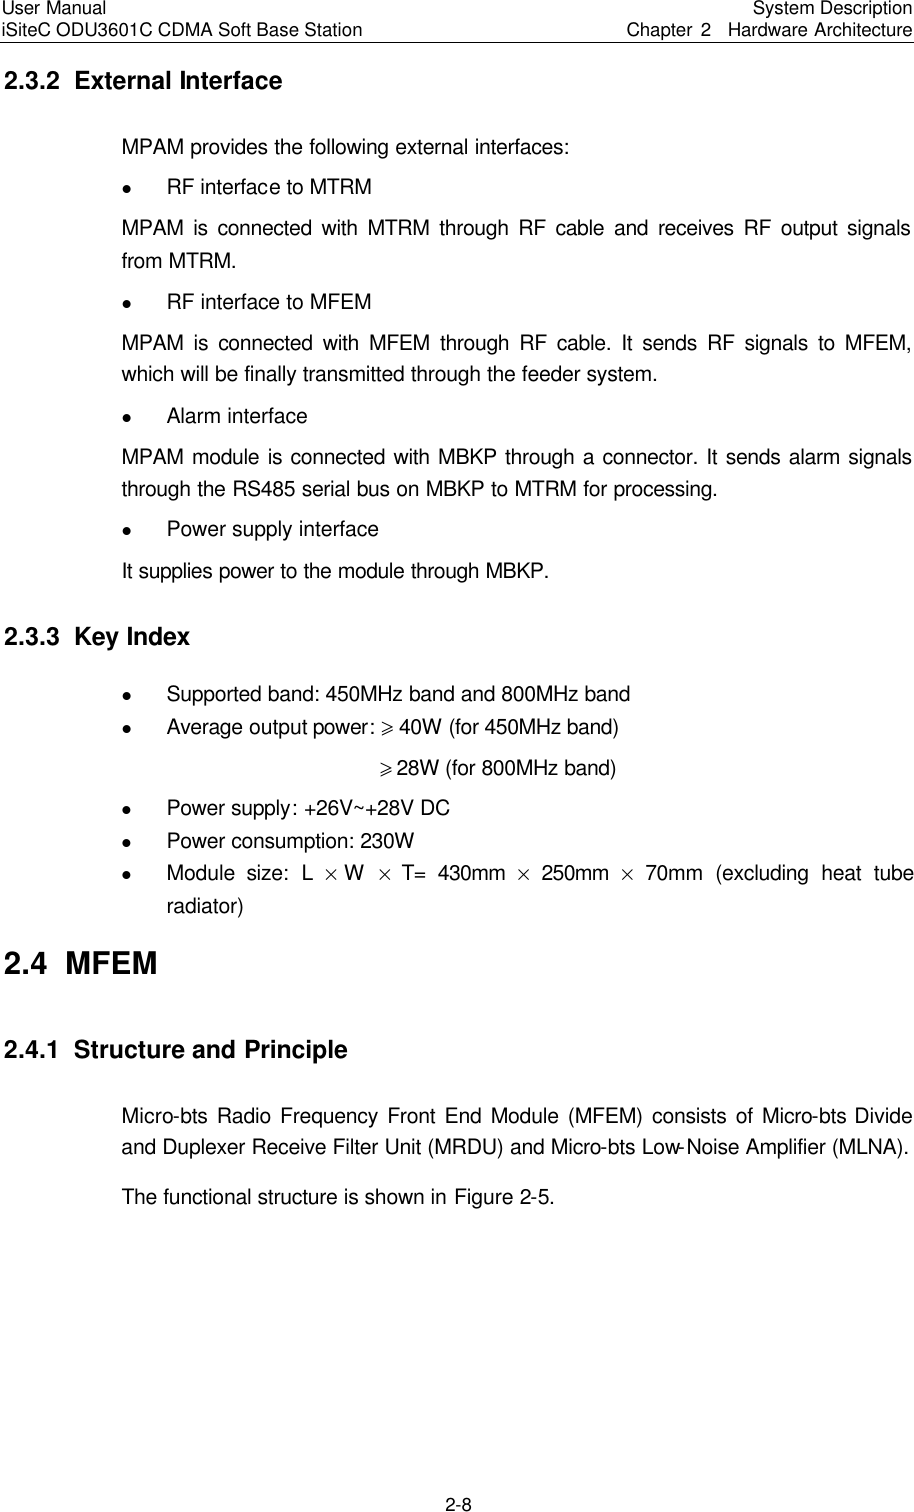 Page 24 of Huawei Technologies ODU3601C-800 CDMA Base Station User Manual 2